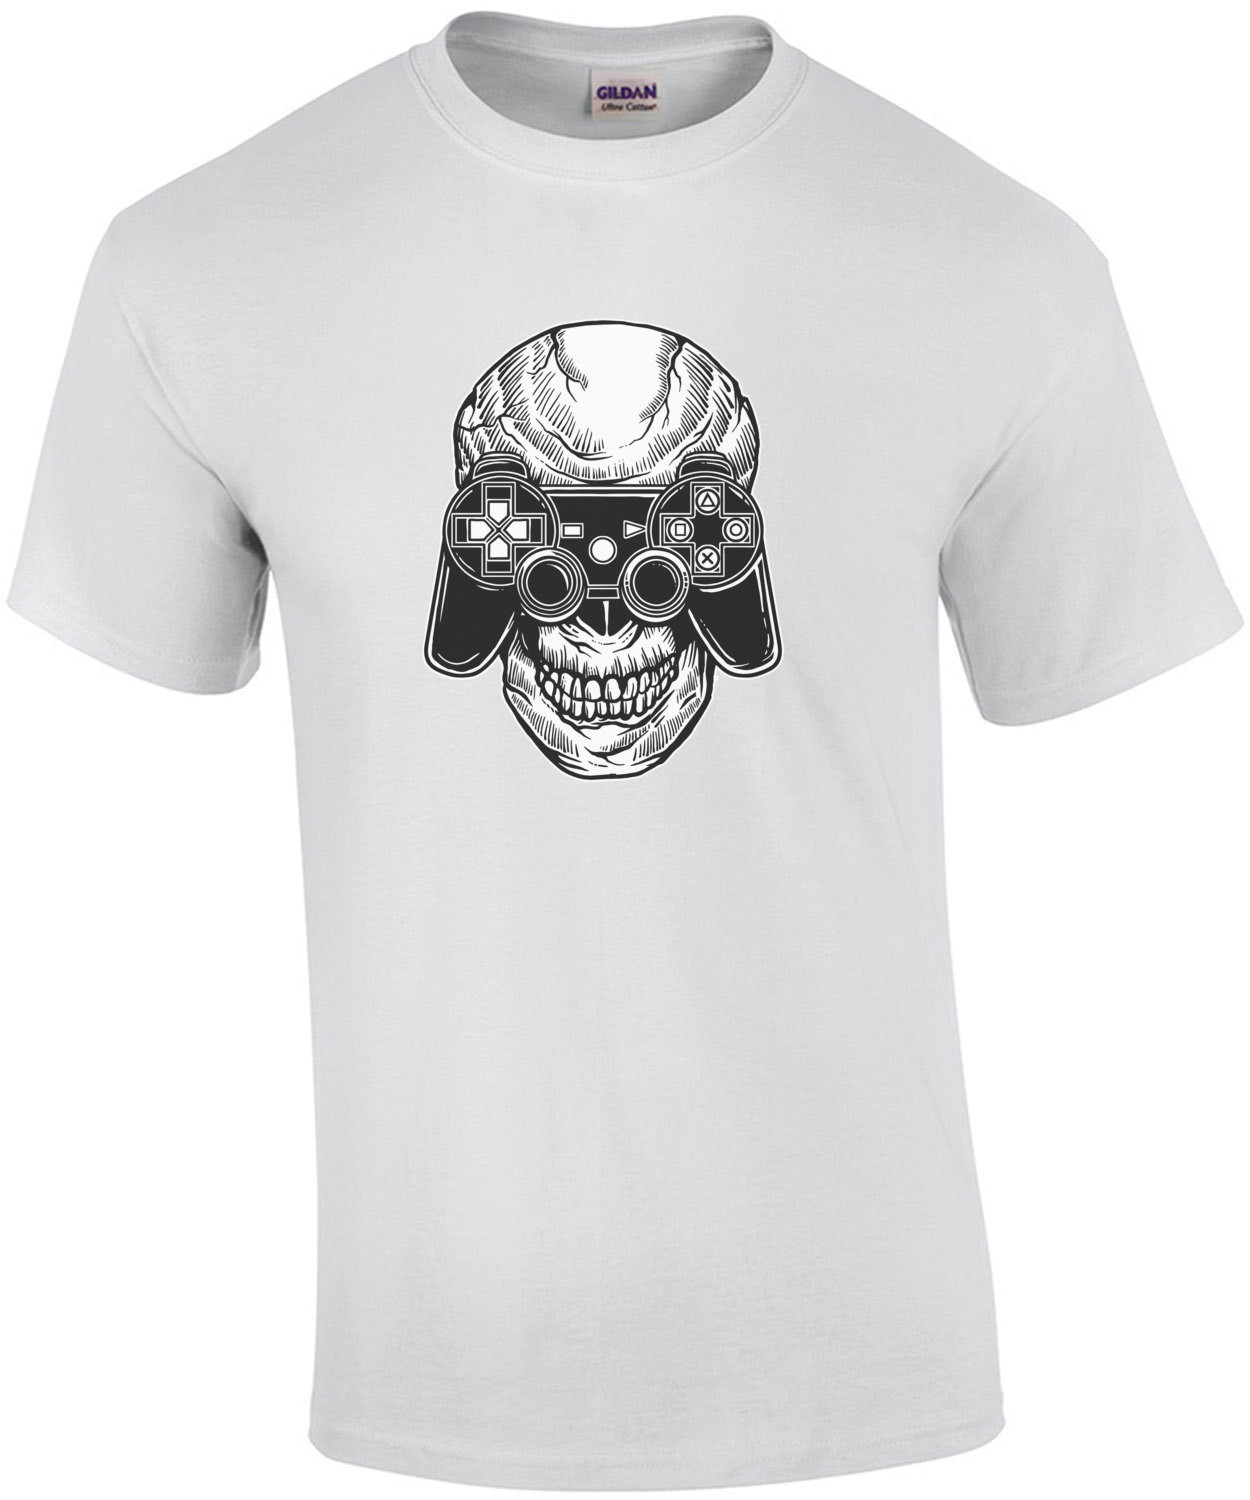 Skeleton Playstation Controller Gothic T-Shirt